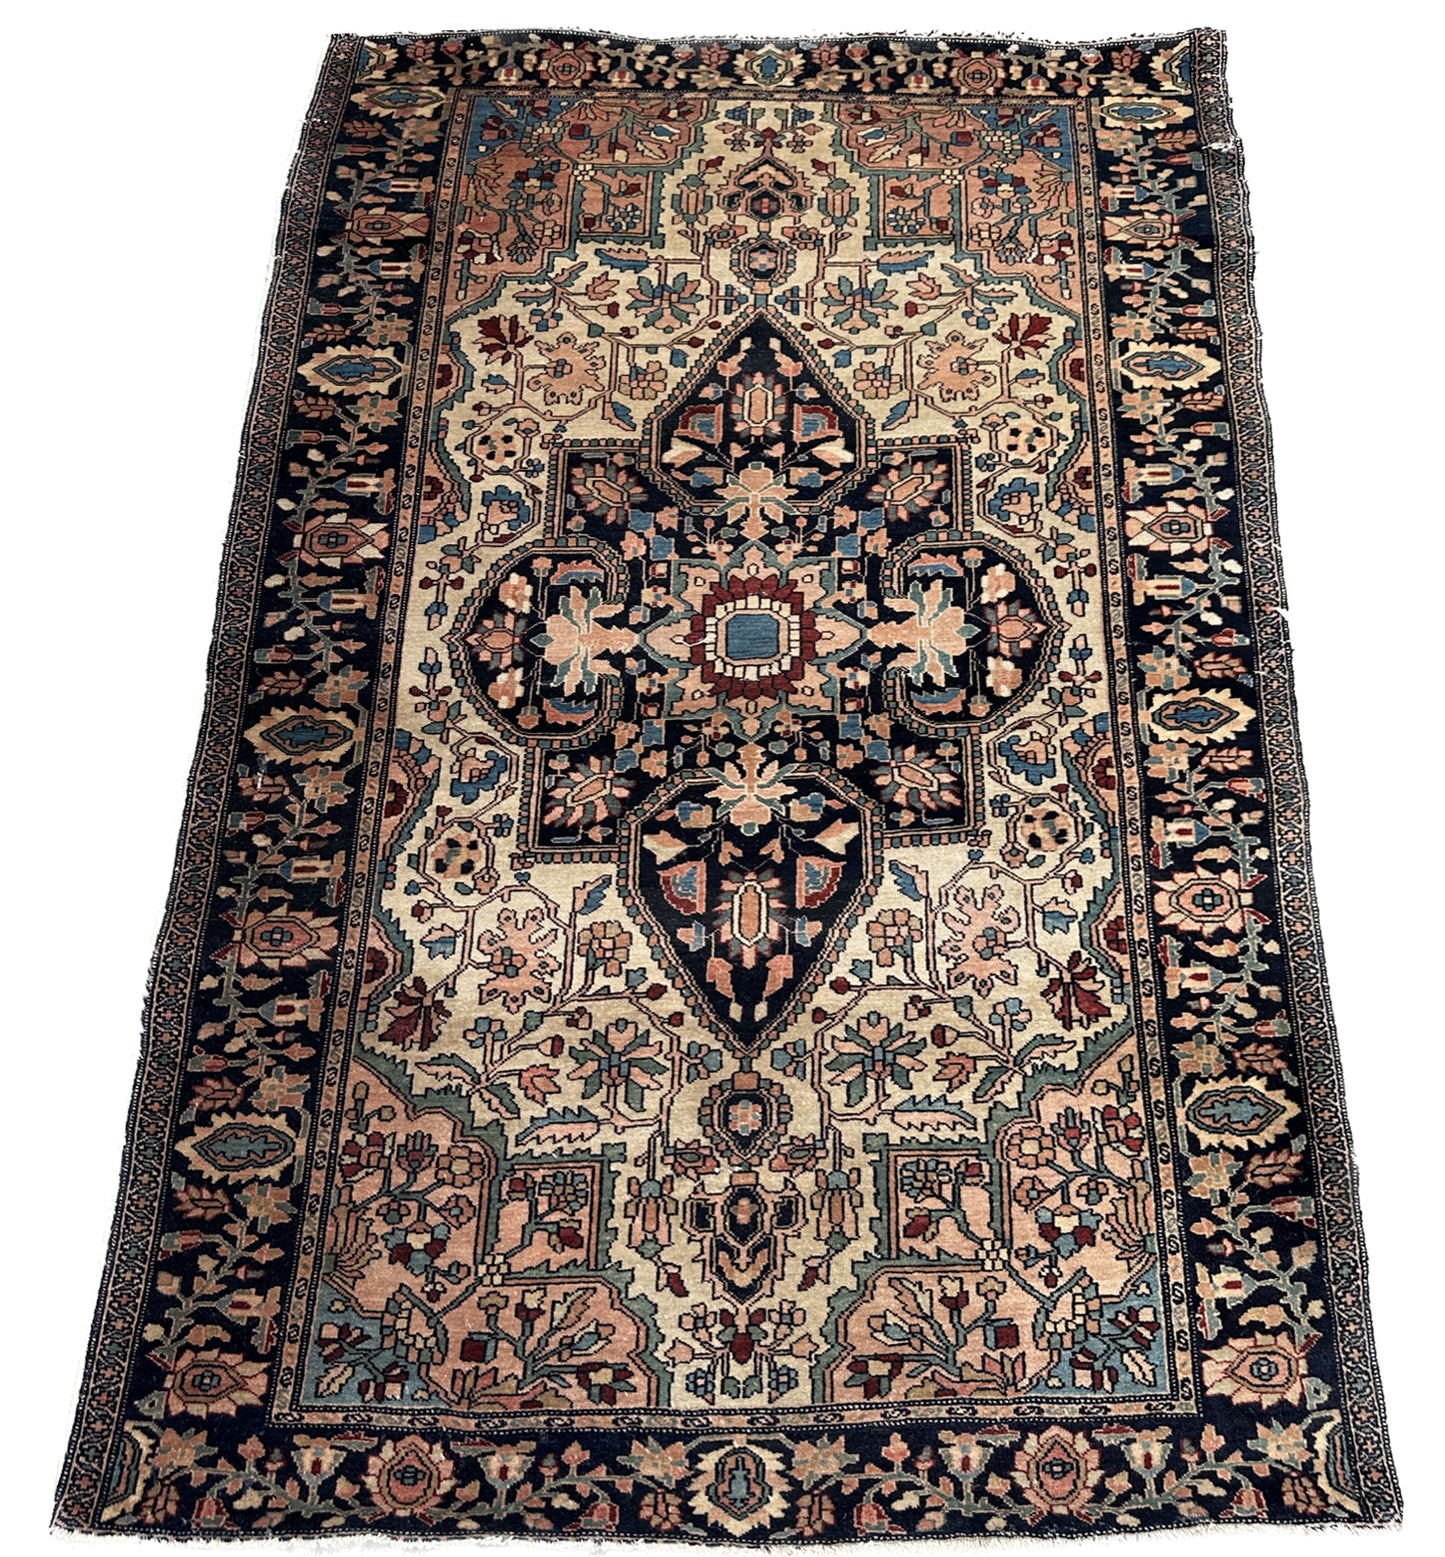 3'x5' Antique Persian Farahan Rug